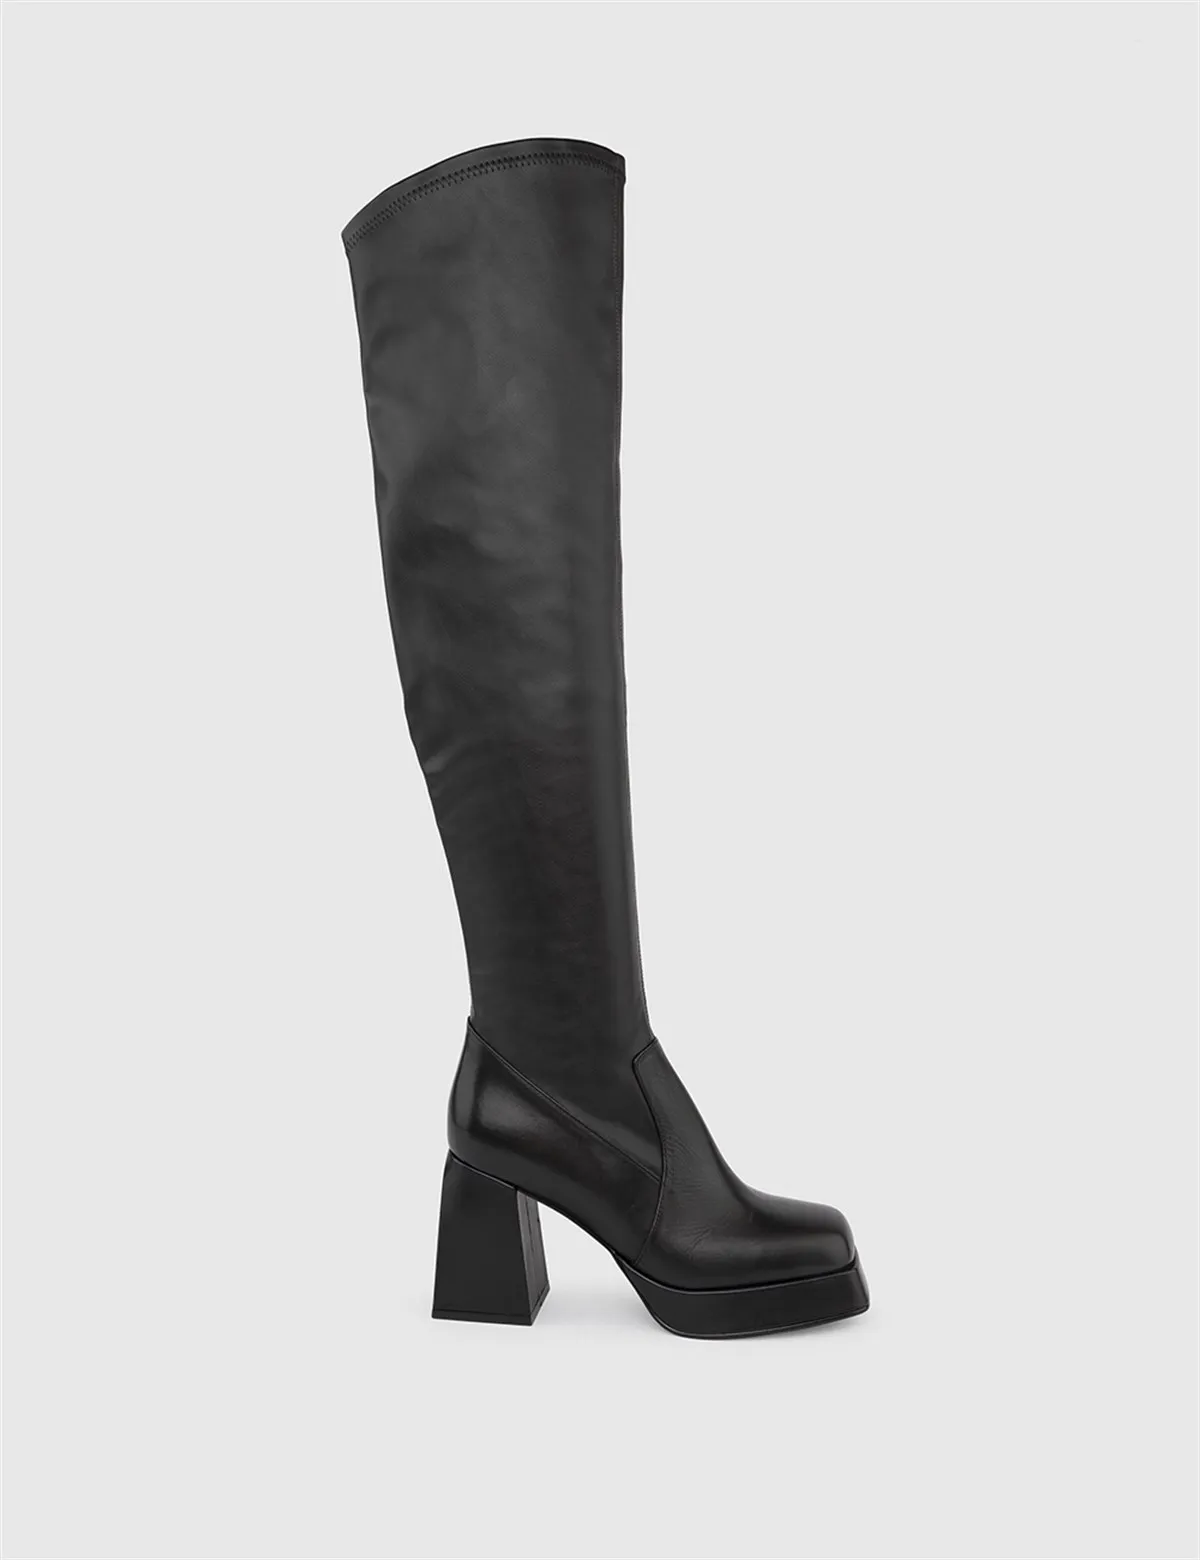 

ILVi-Genuine Leather Handmade Senate Black Stretch Heeled High Boot Women's Shoes 2022 Fall/Winter